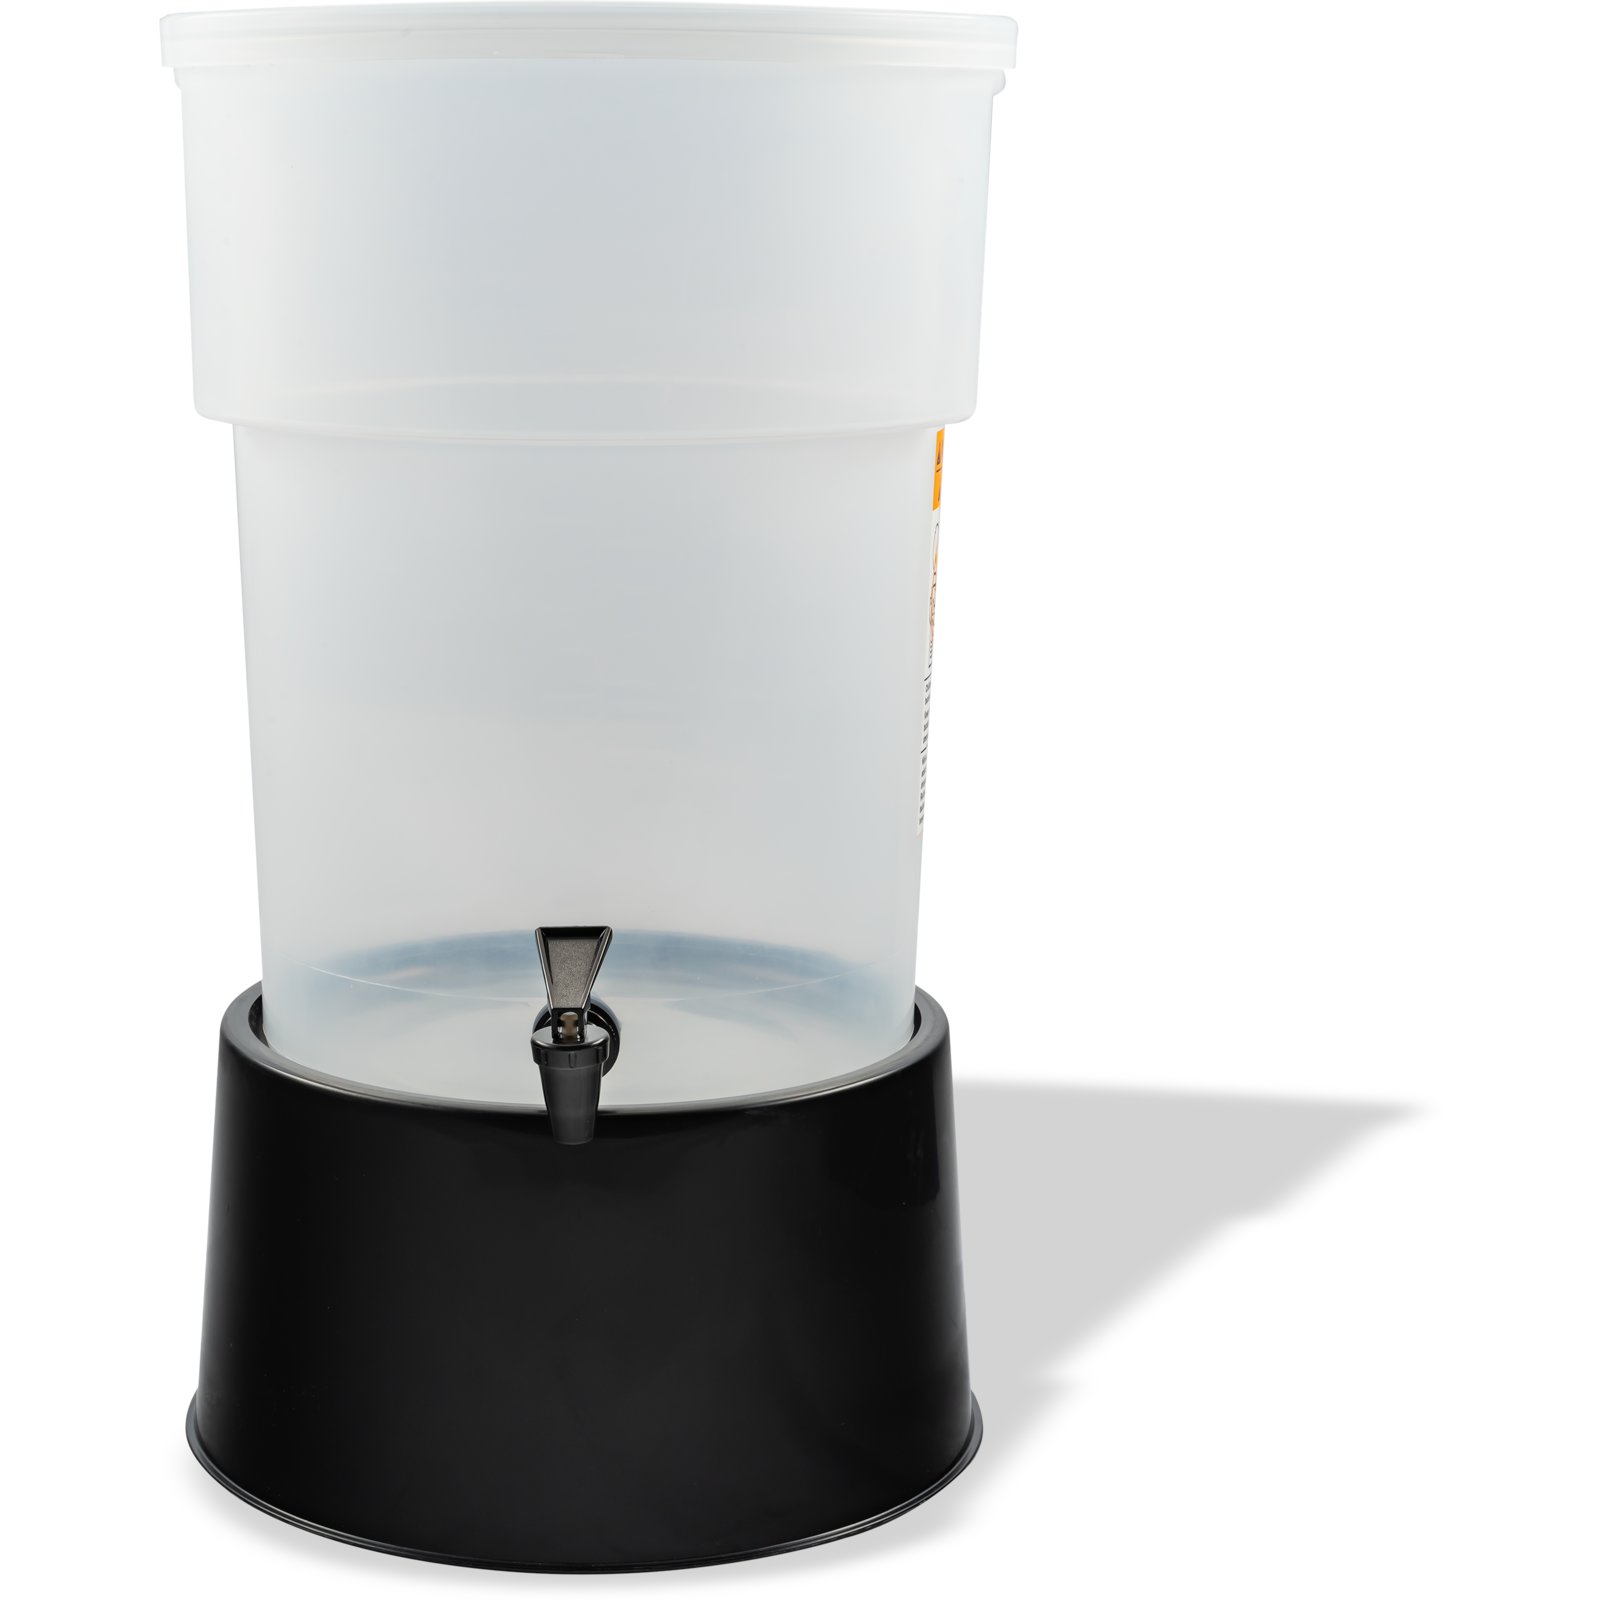 222903 - Round Beverage Dispenser with Base 5 Gallon - Black